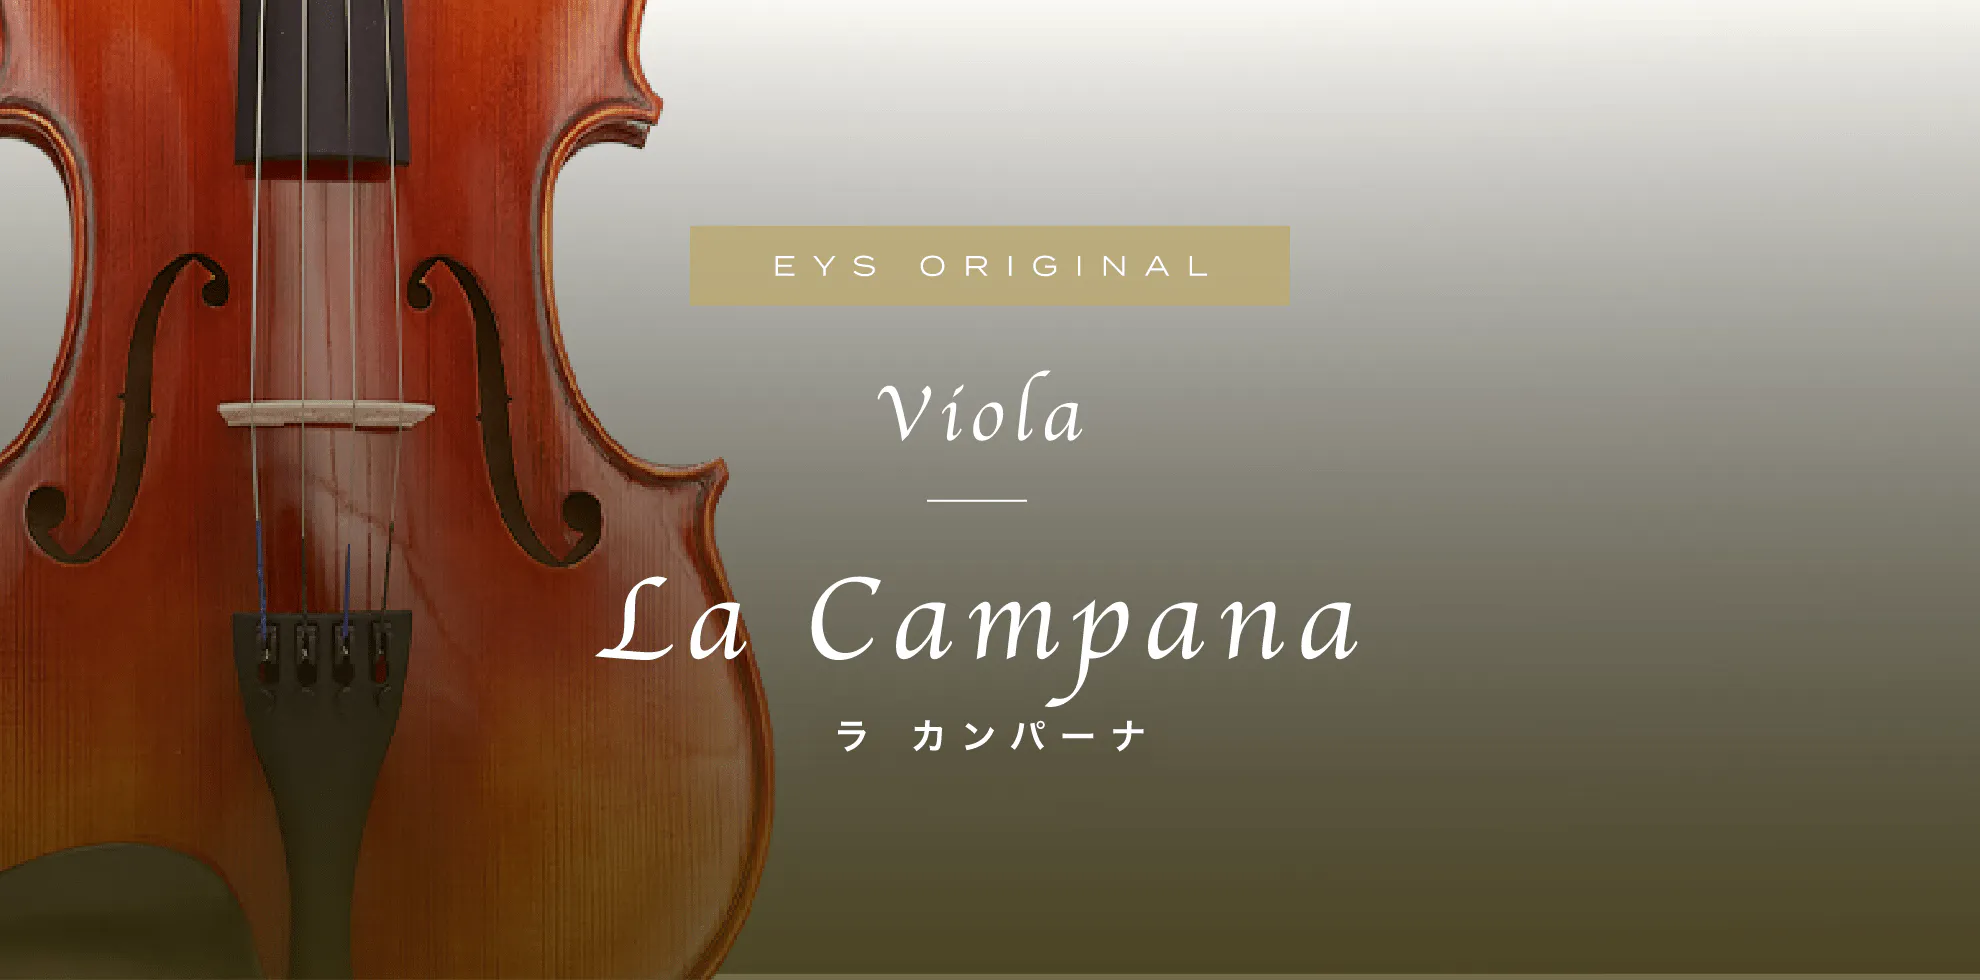 EYS ORIGINAL Viola La Campana ラ カンパーナ